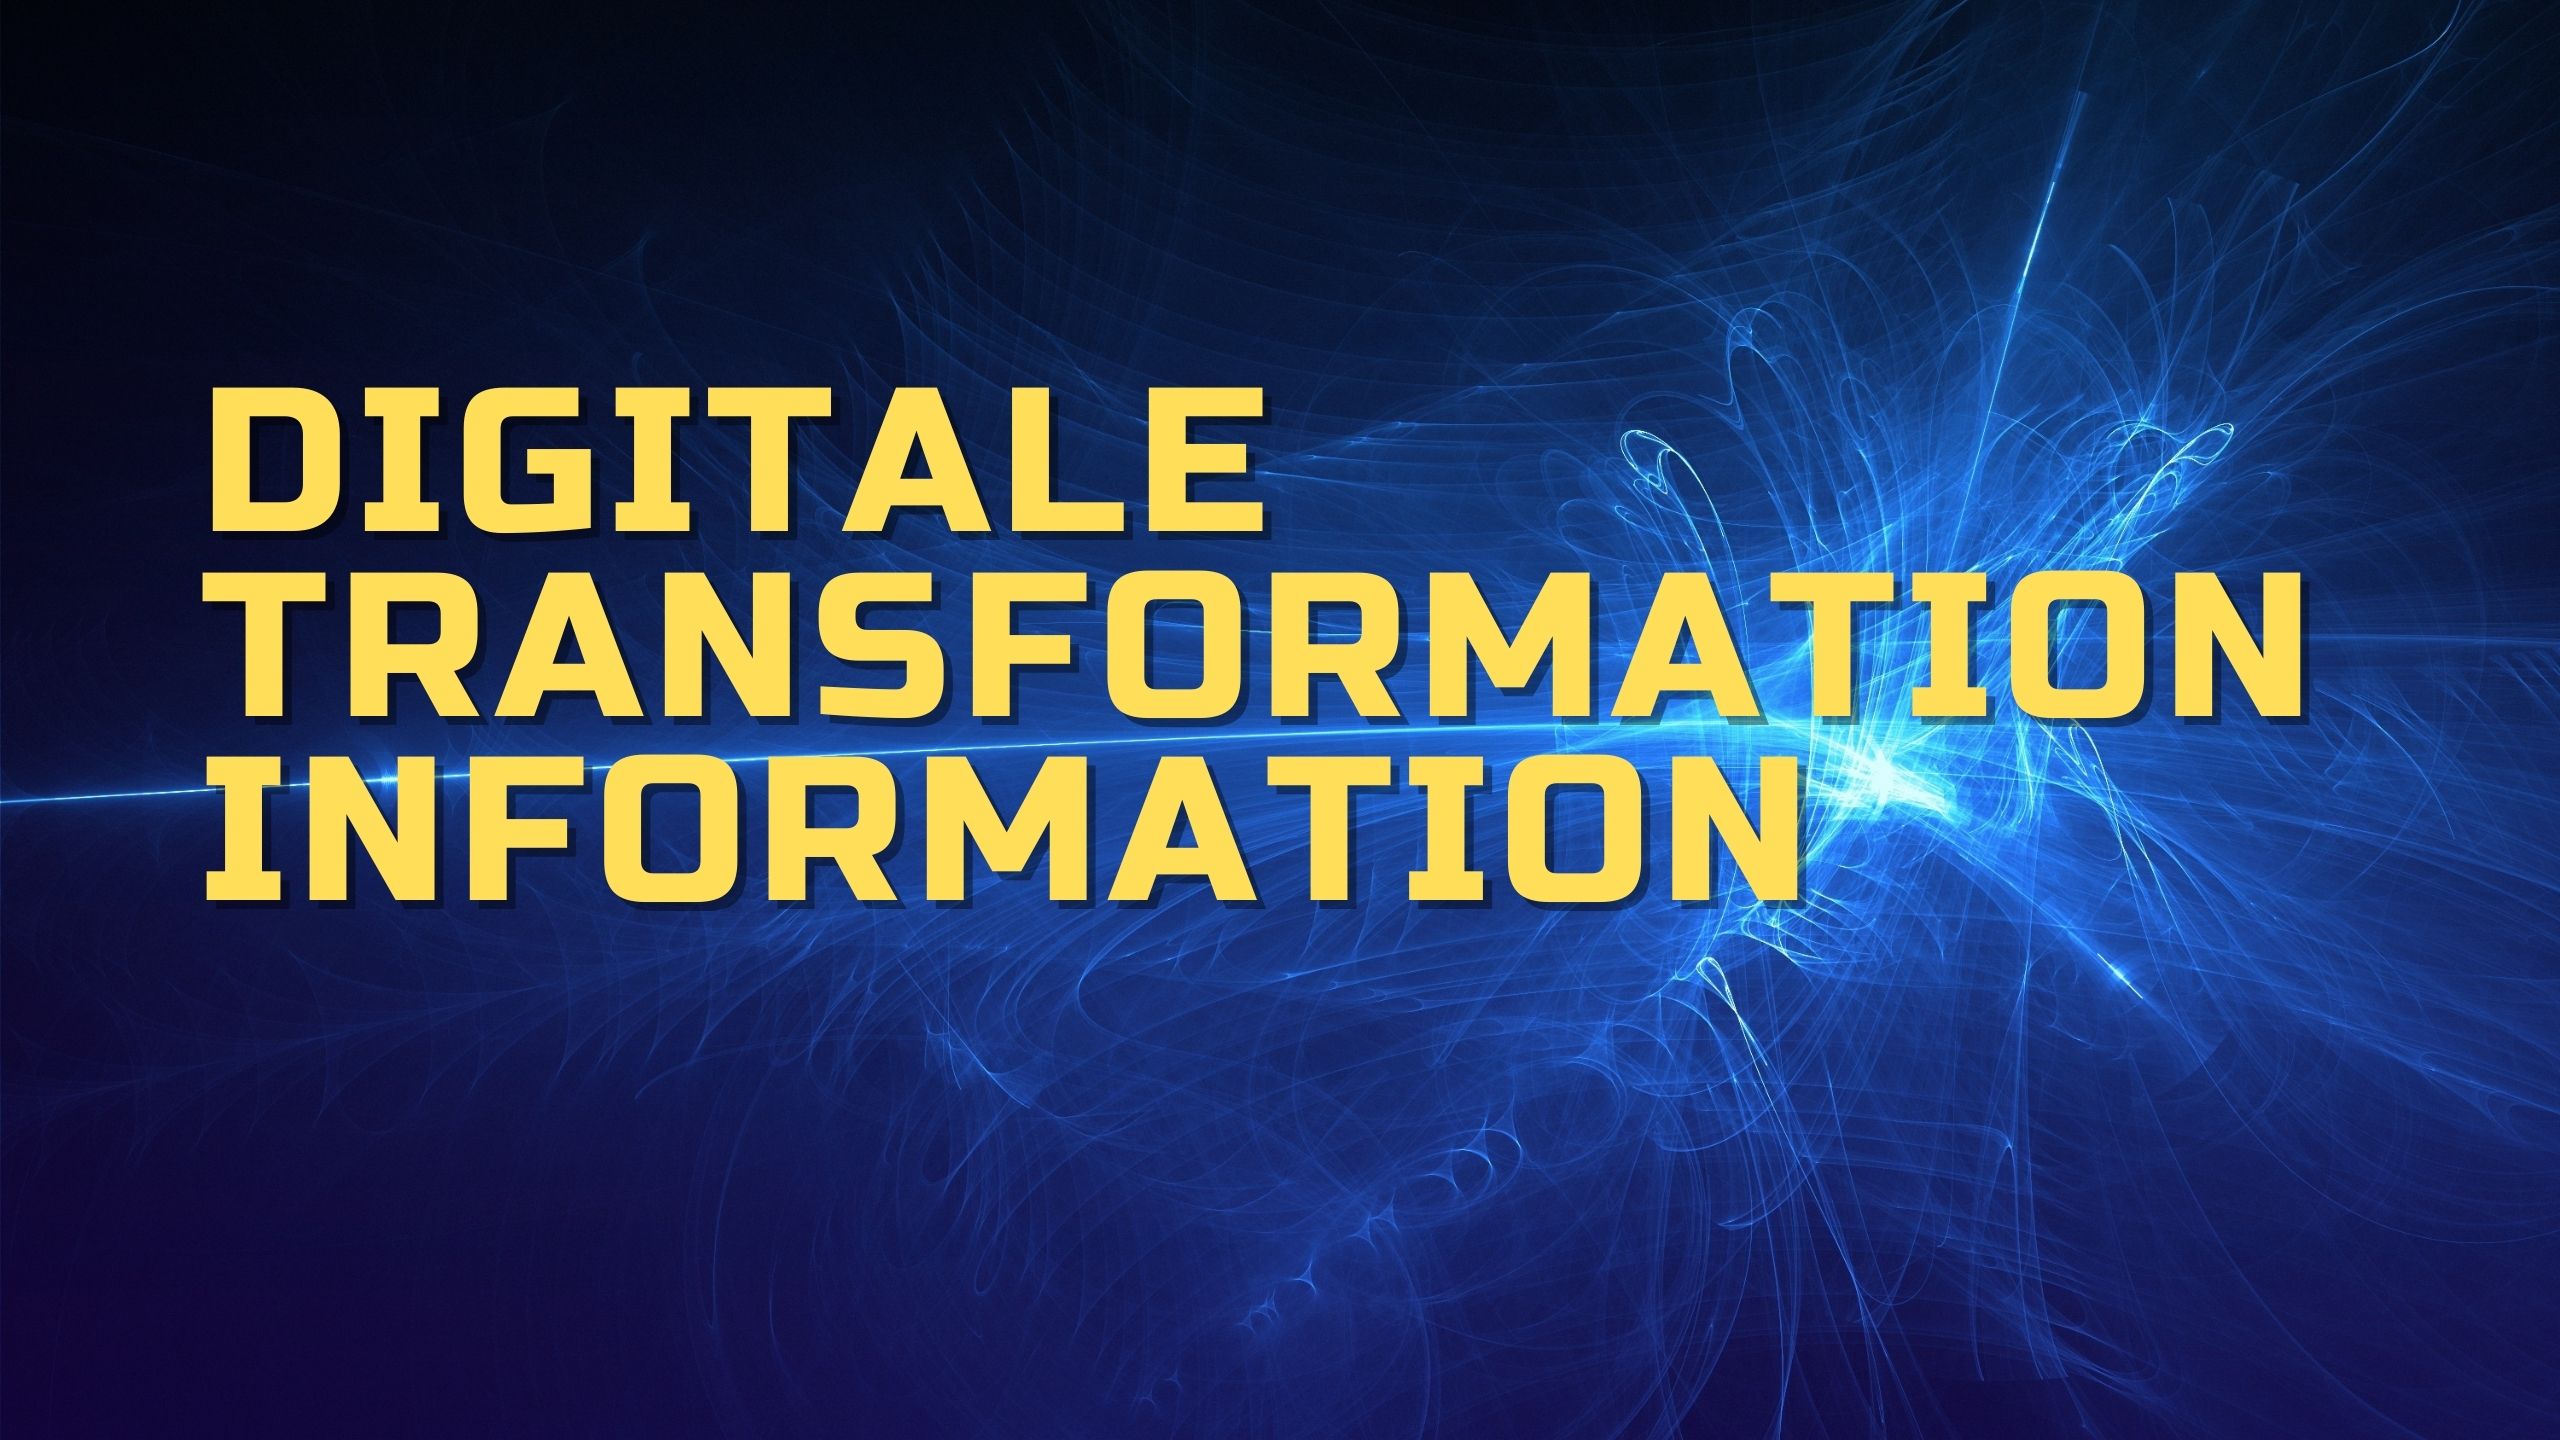 Dititale Transformation Info